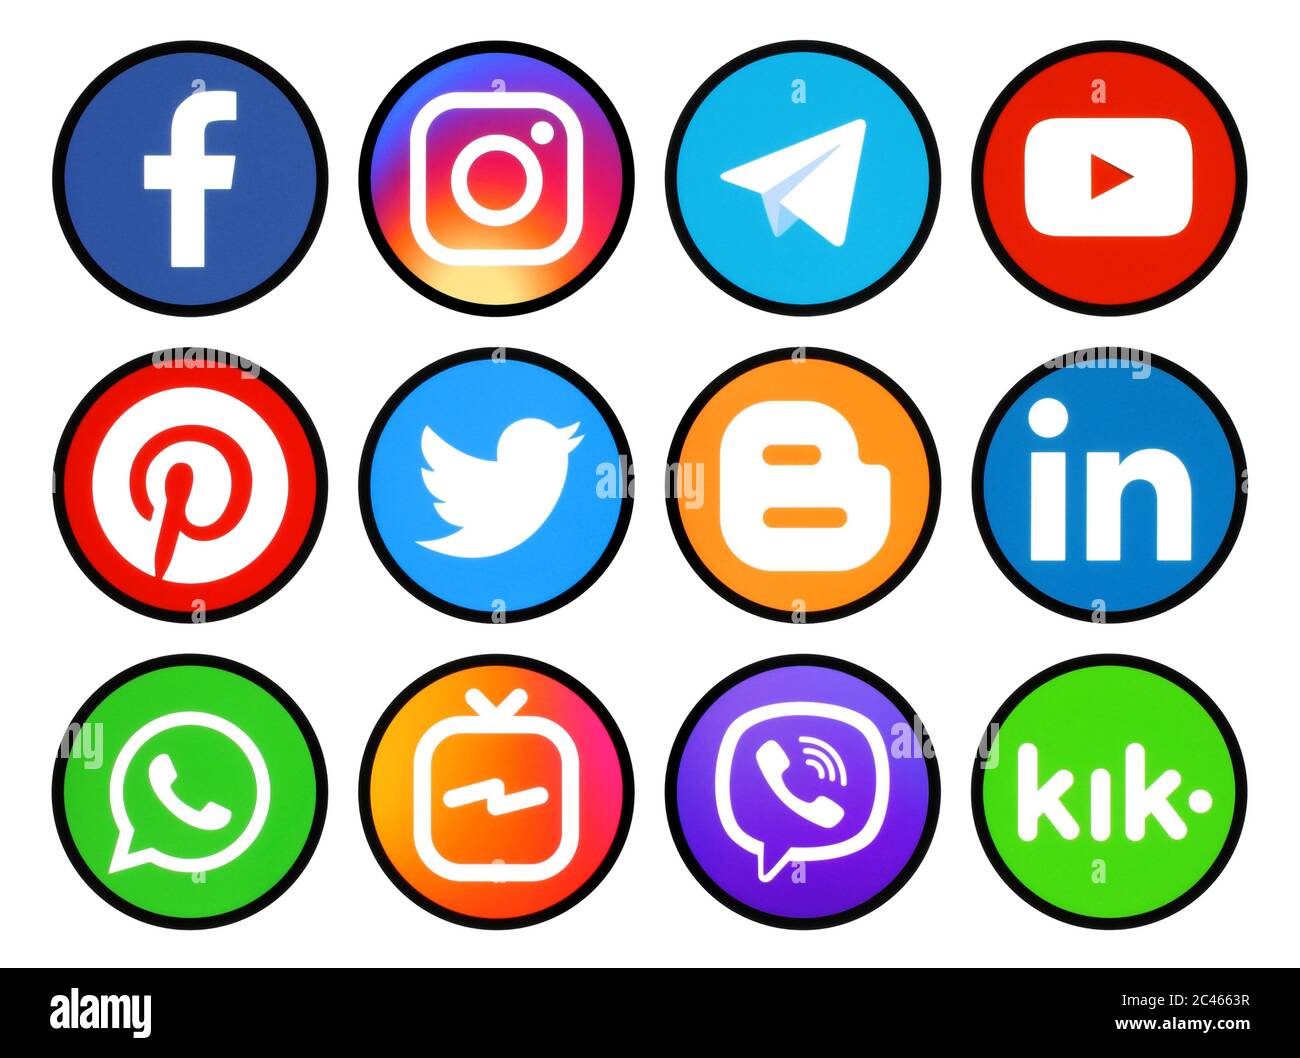 Kiev, Ukraine - March 11, 2019: Set of round icons with black rim of social media printed on paper: Pinterest, Twitter, Instagram, Facebook, LinkedIn, Stock Photo